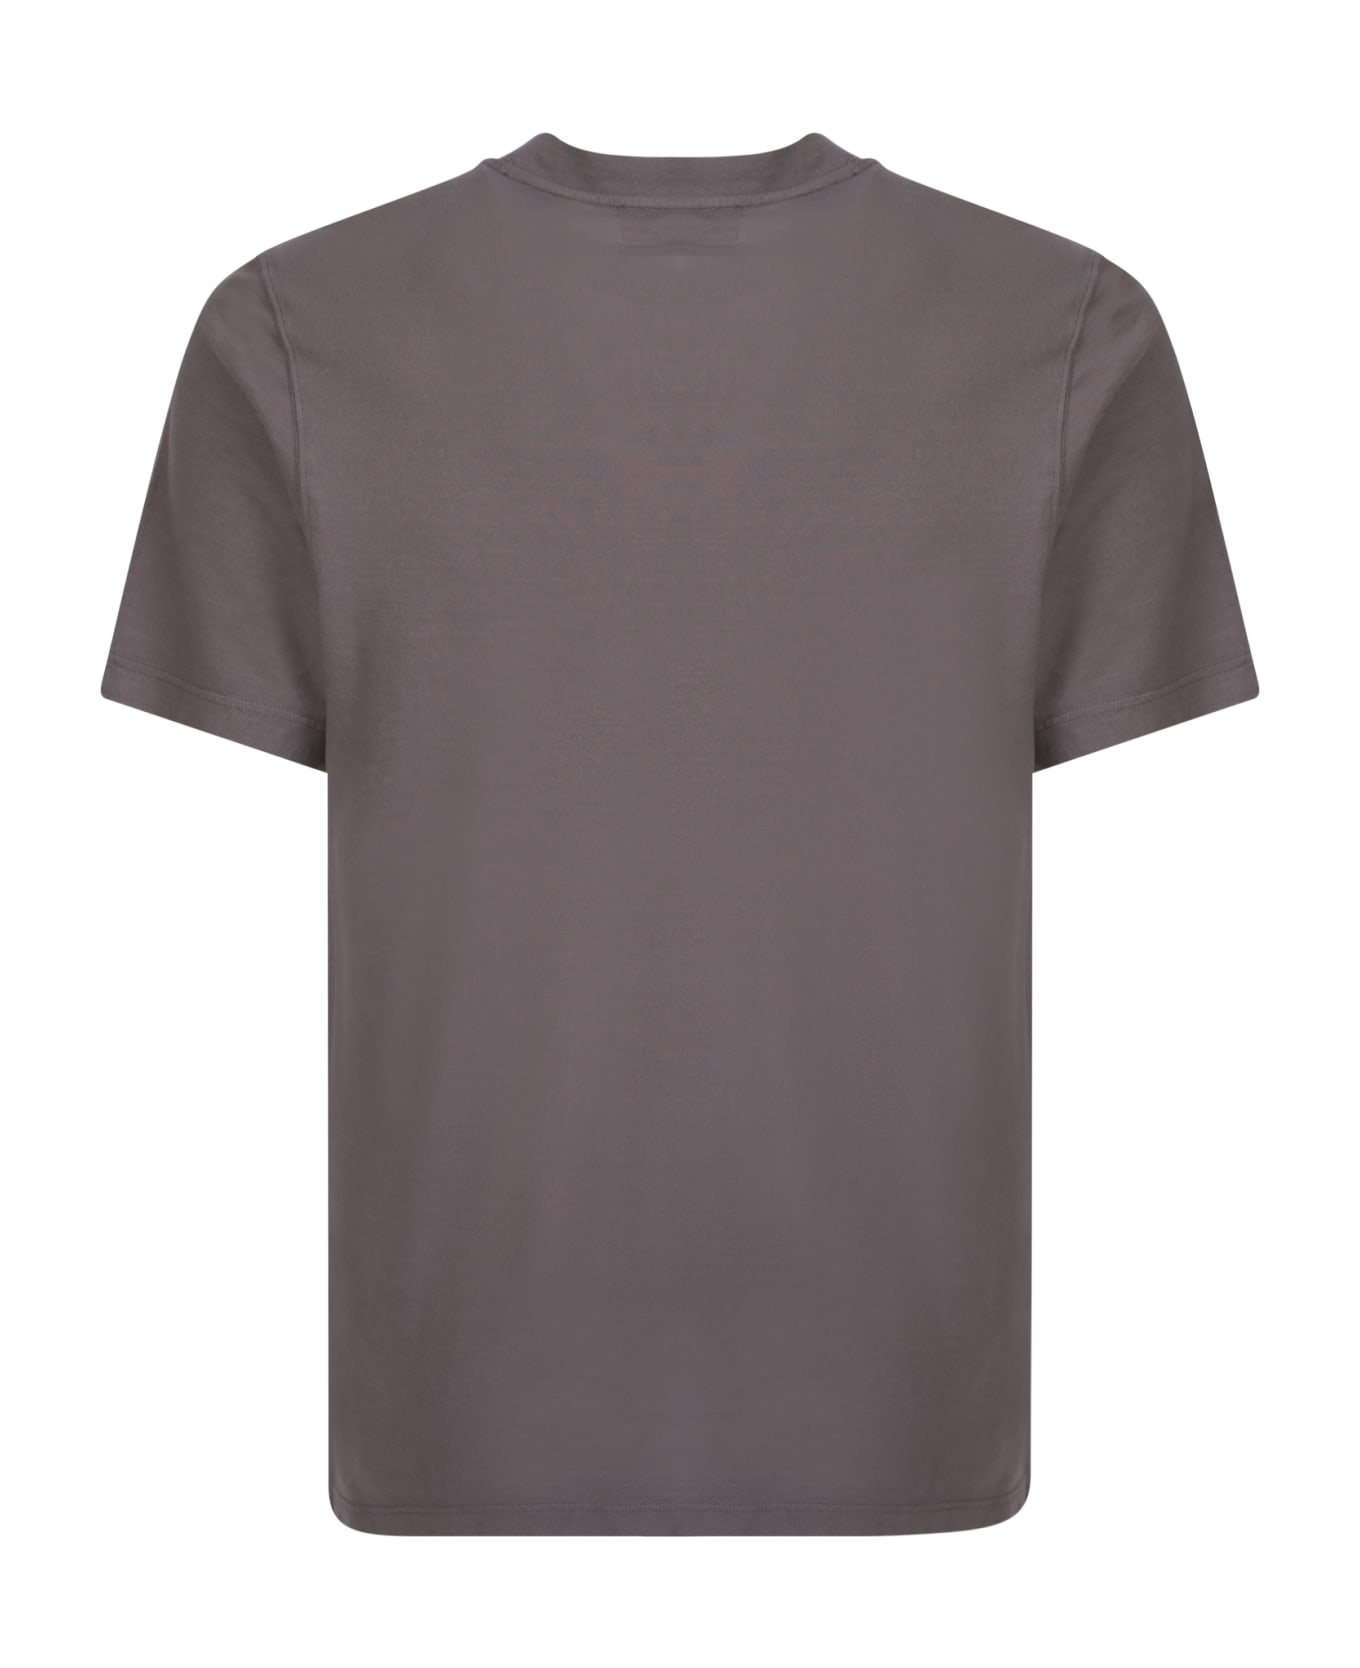 Lardini Cotton Brown T-shirt - Brown